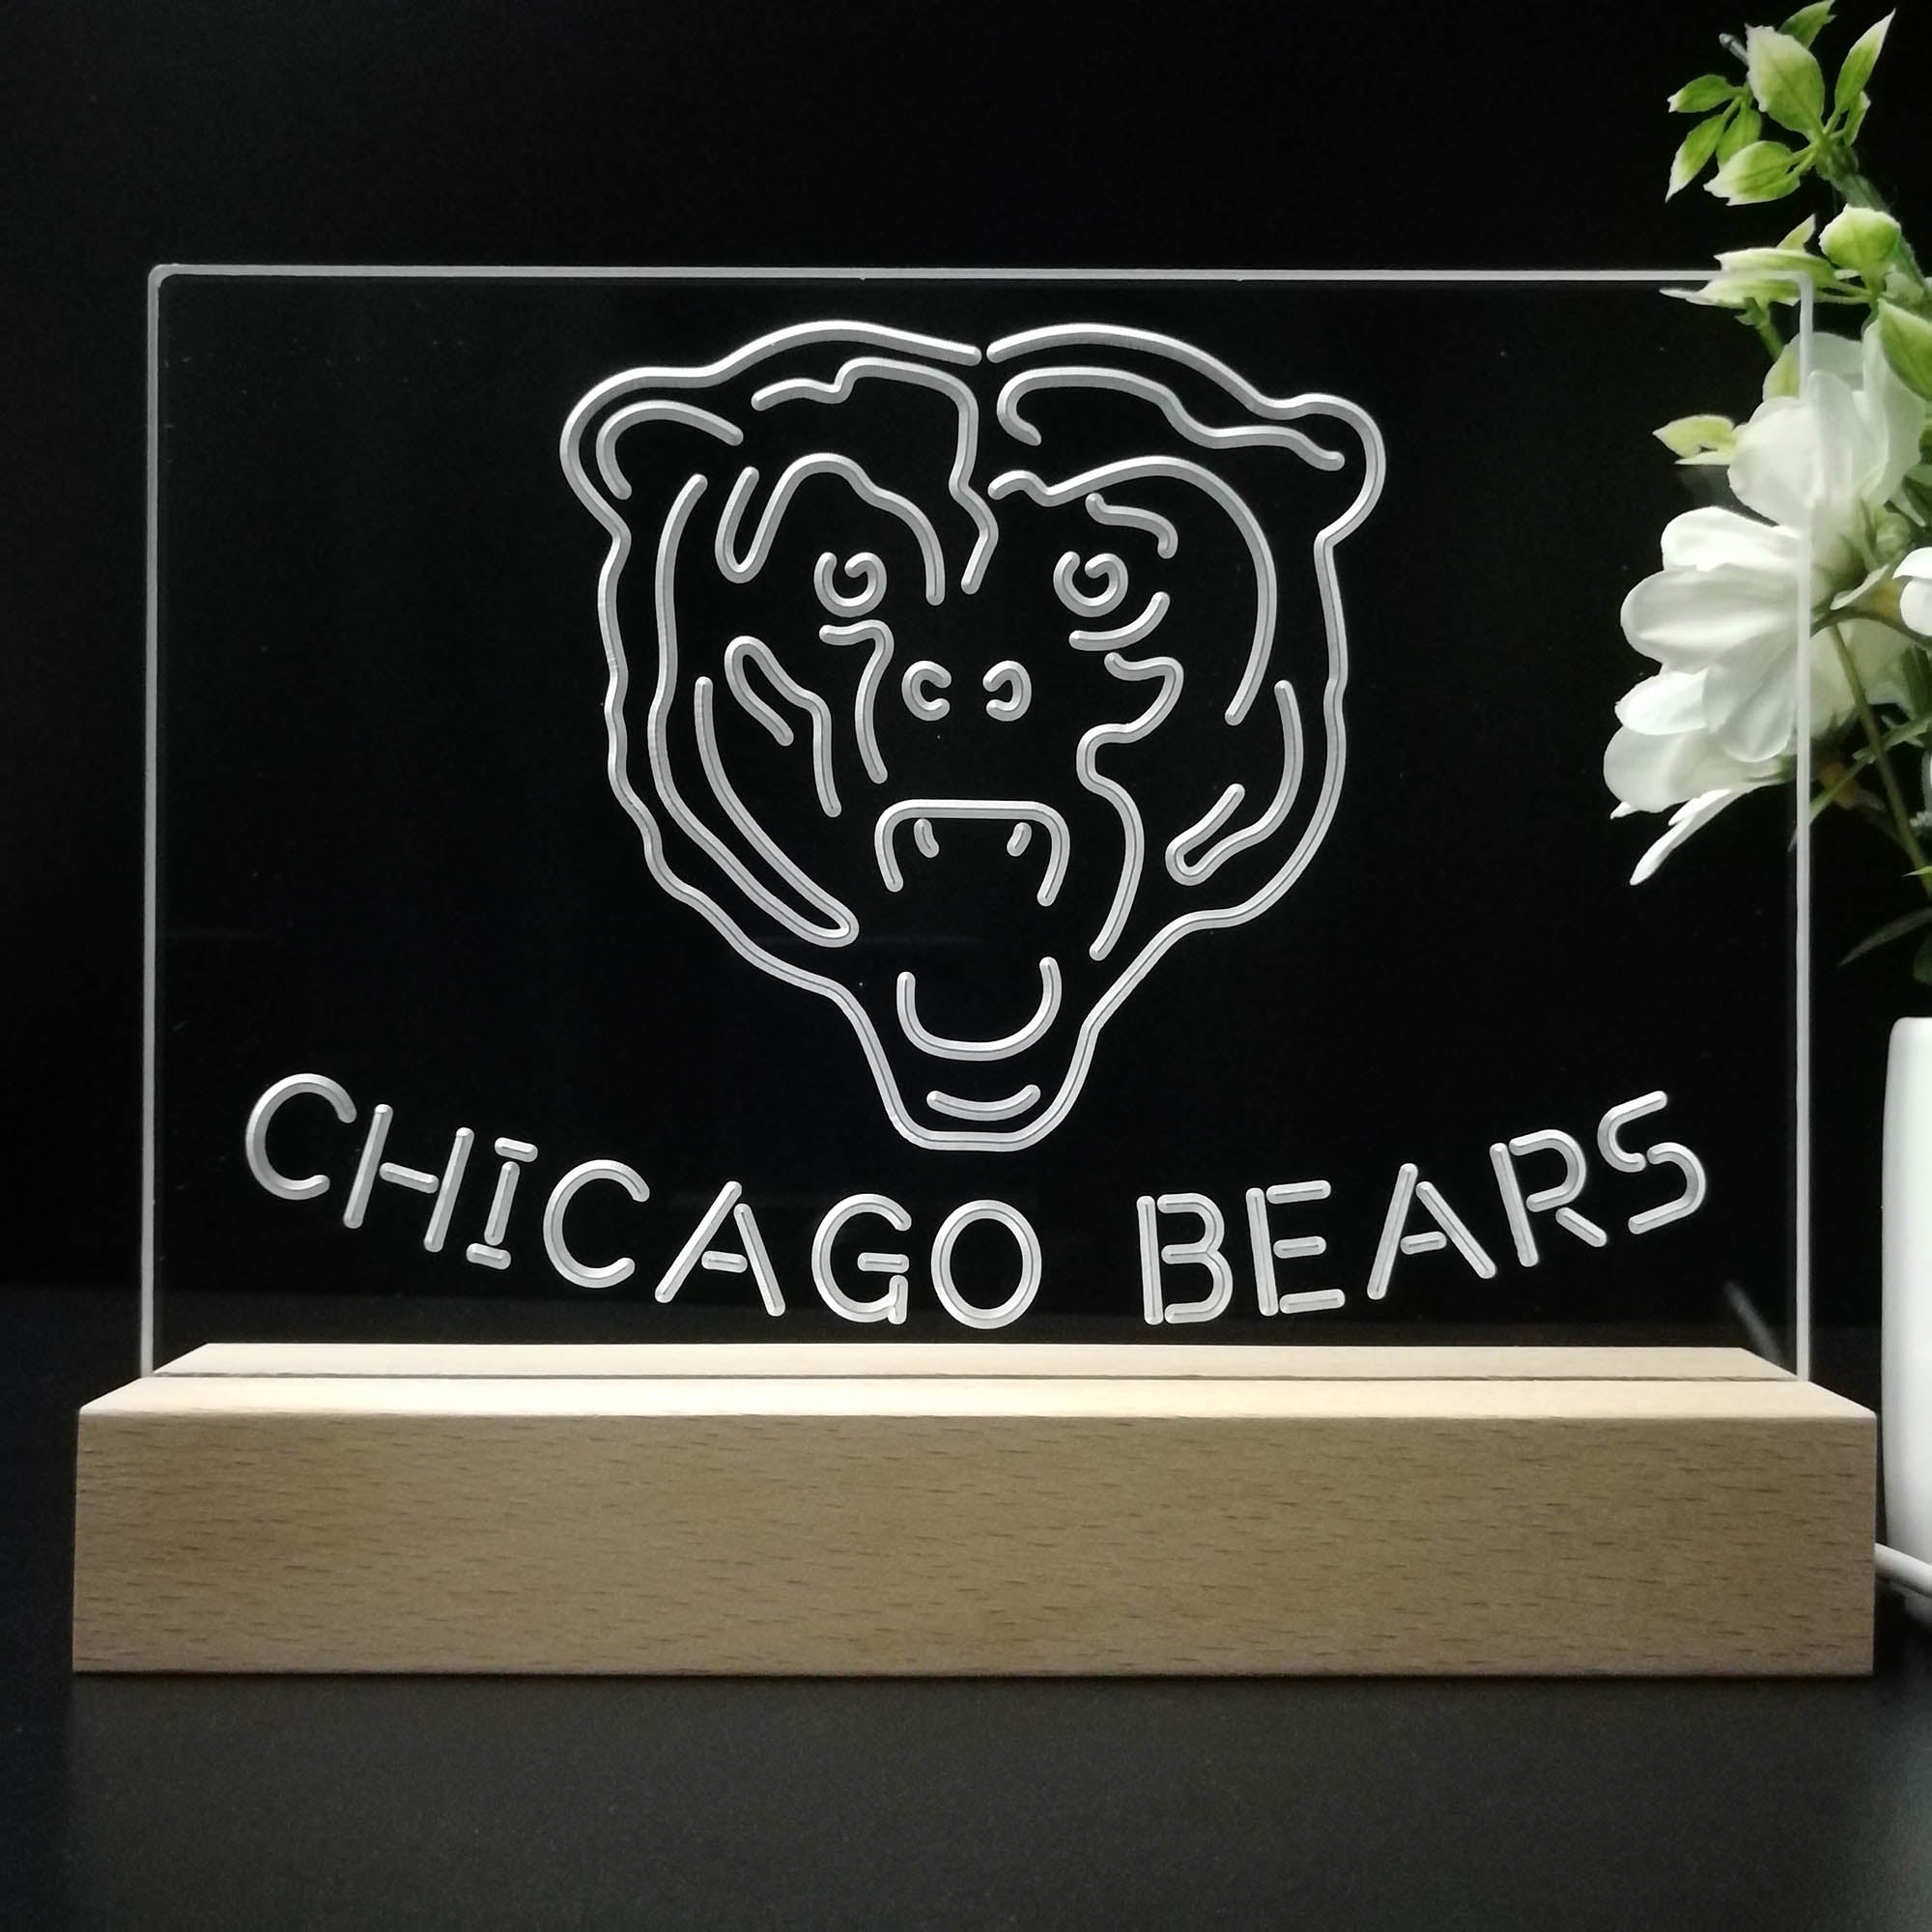 Chicago Bears  Neon Sign Pub Bar Lamp